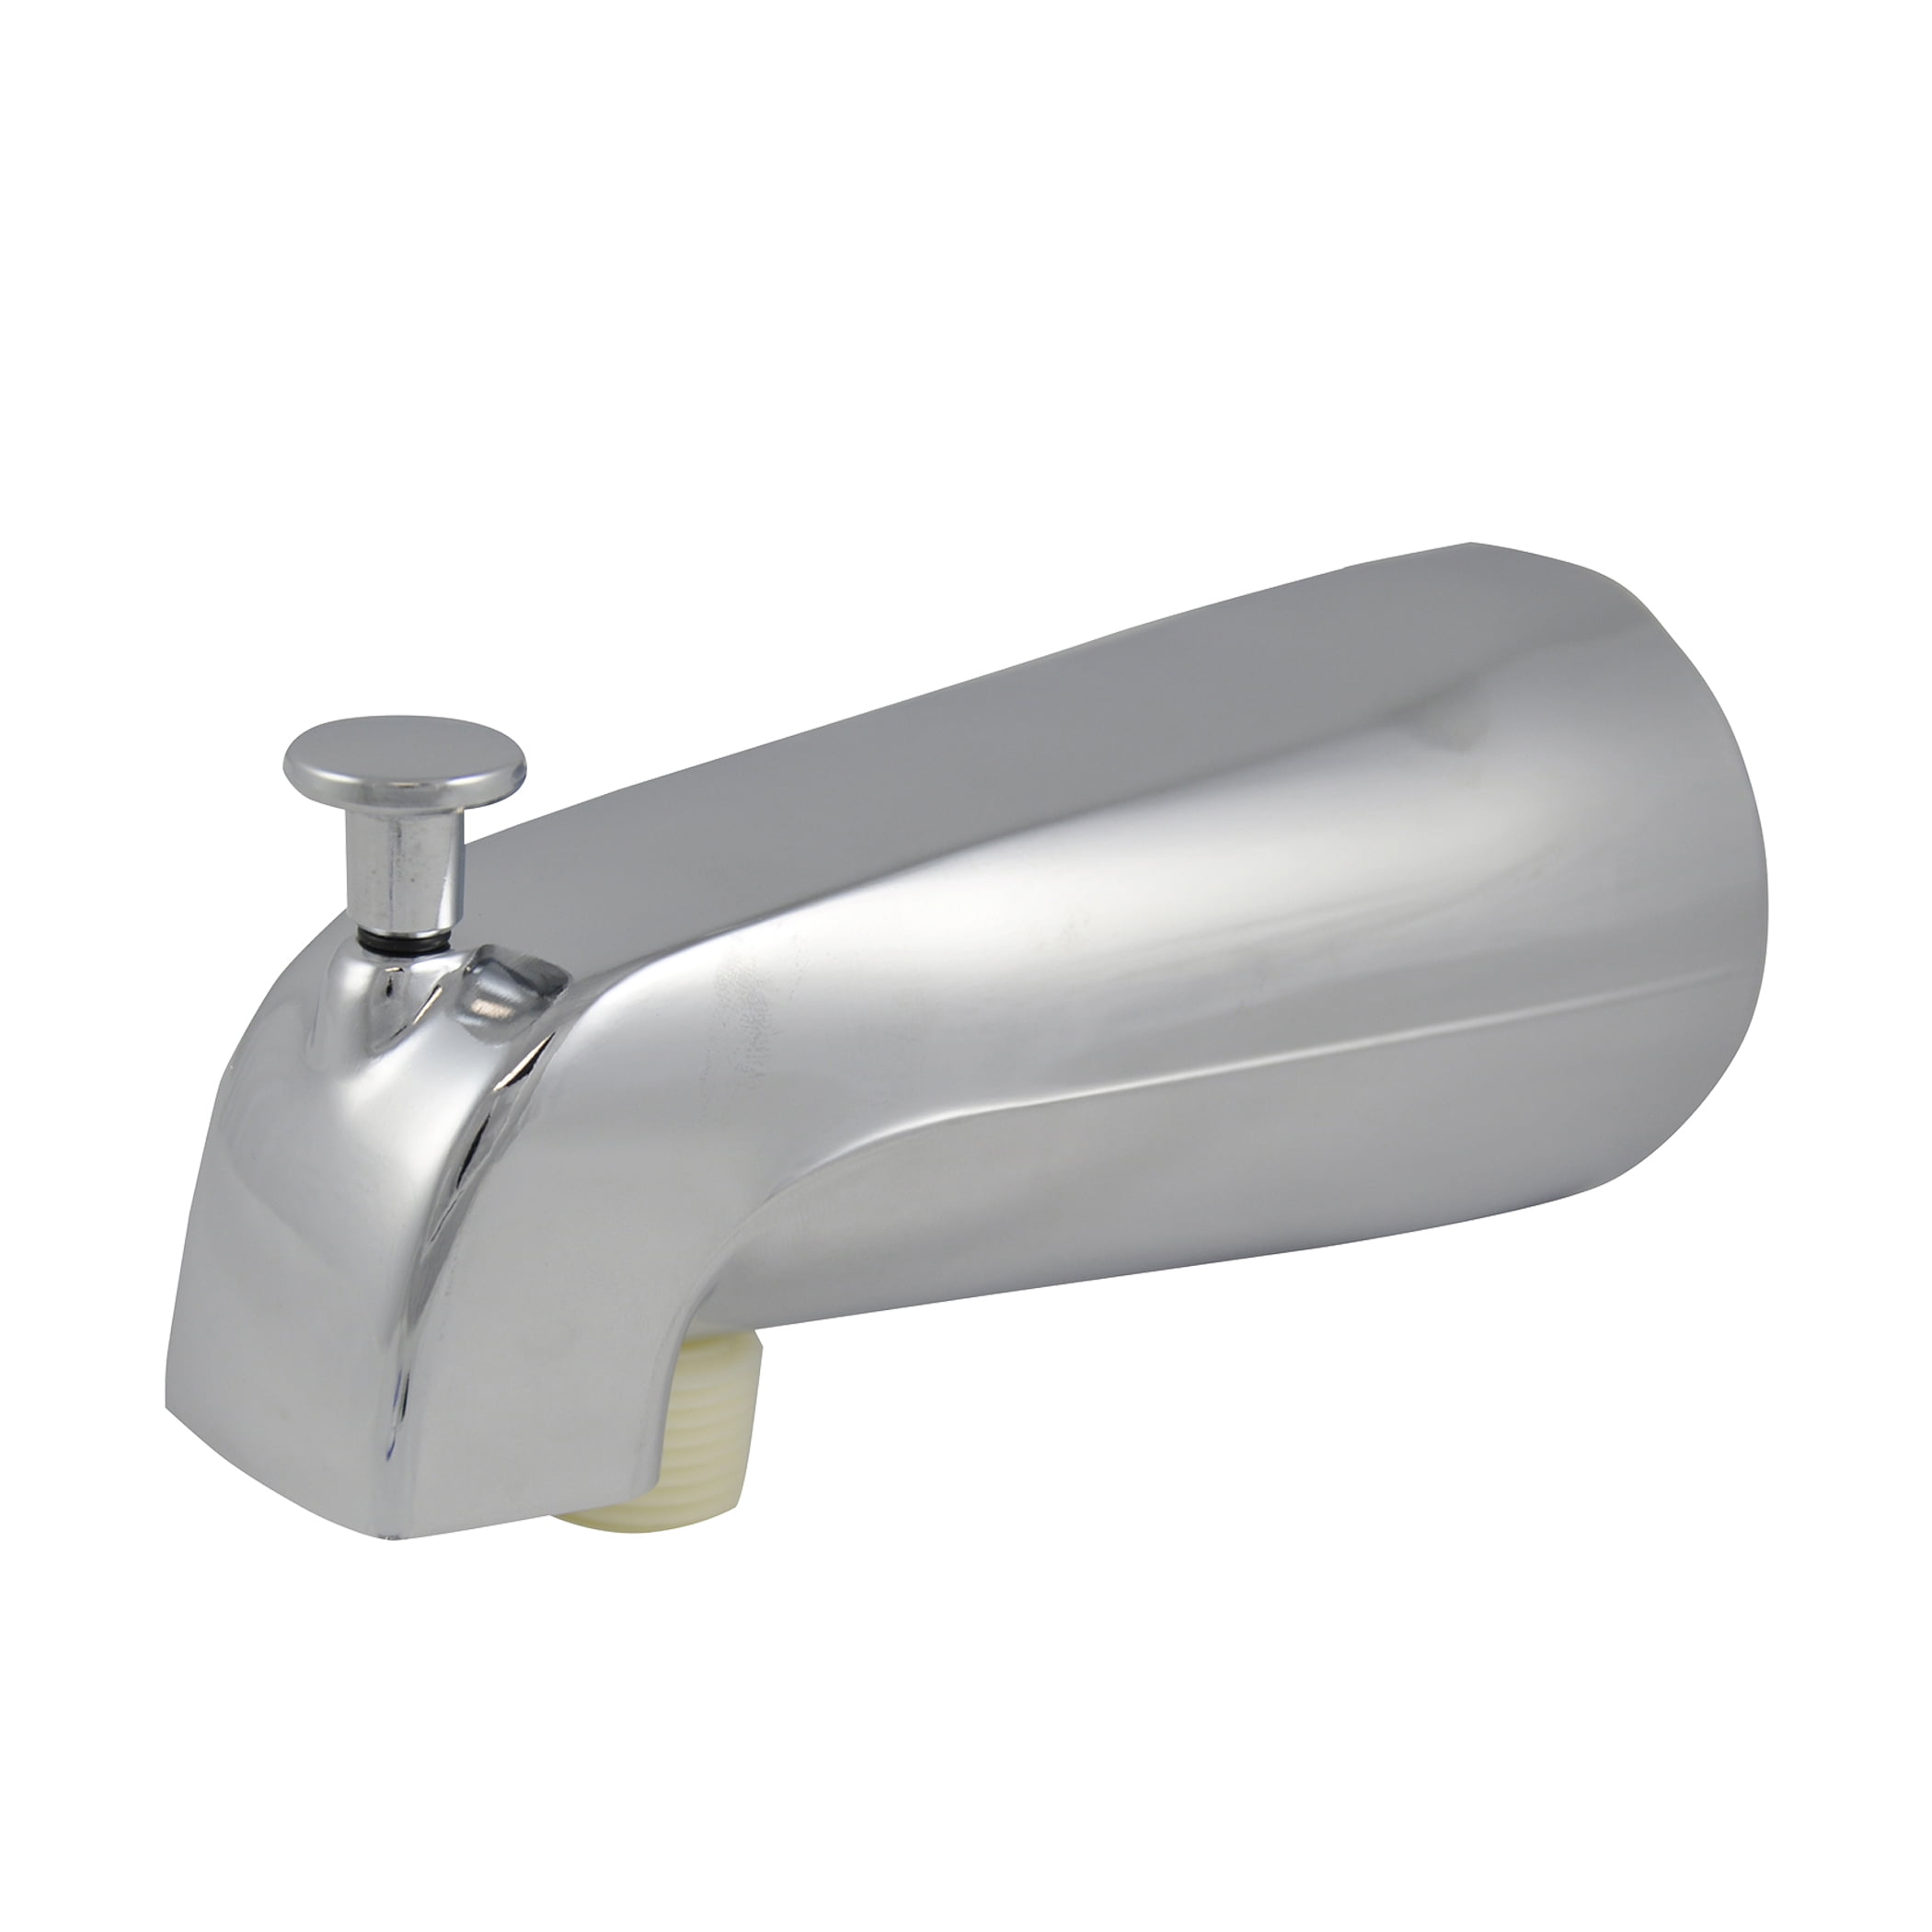 Danco Universal Tub Spout With Handheld, Bathtub Faucet With Shower Riser